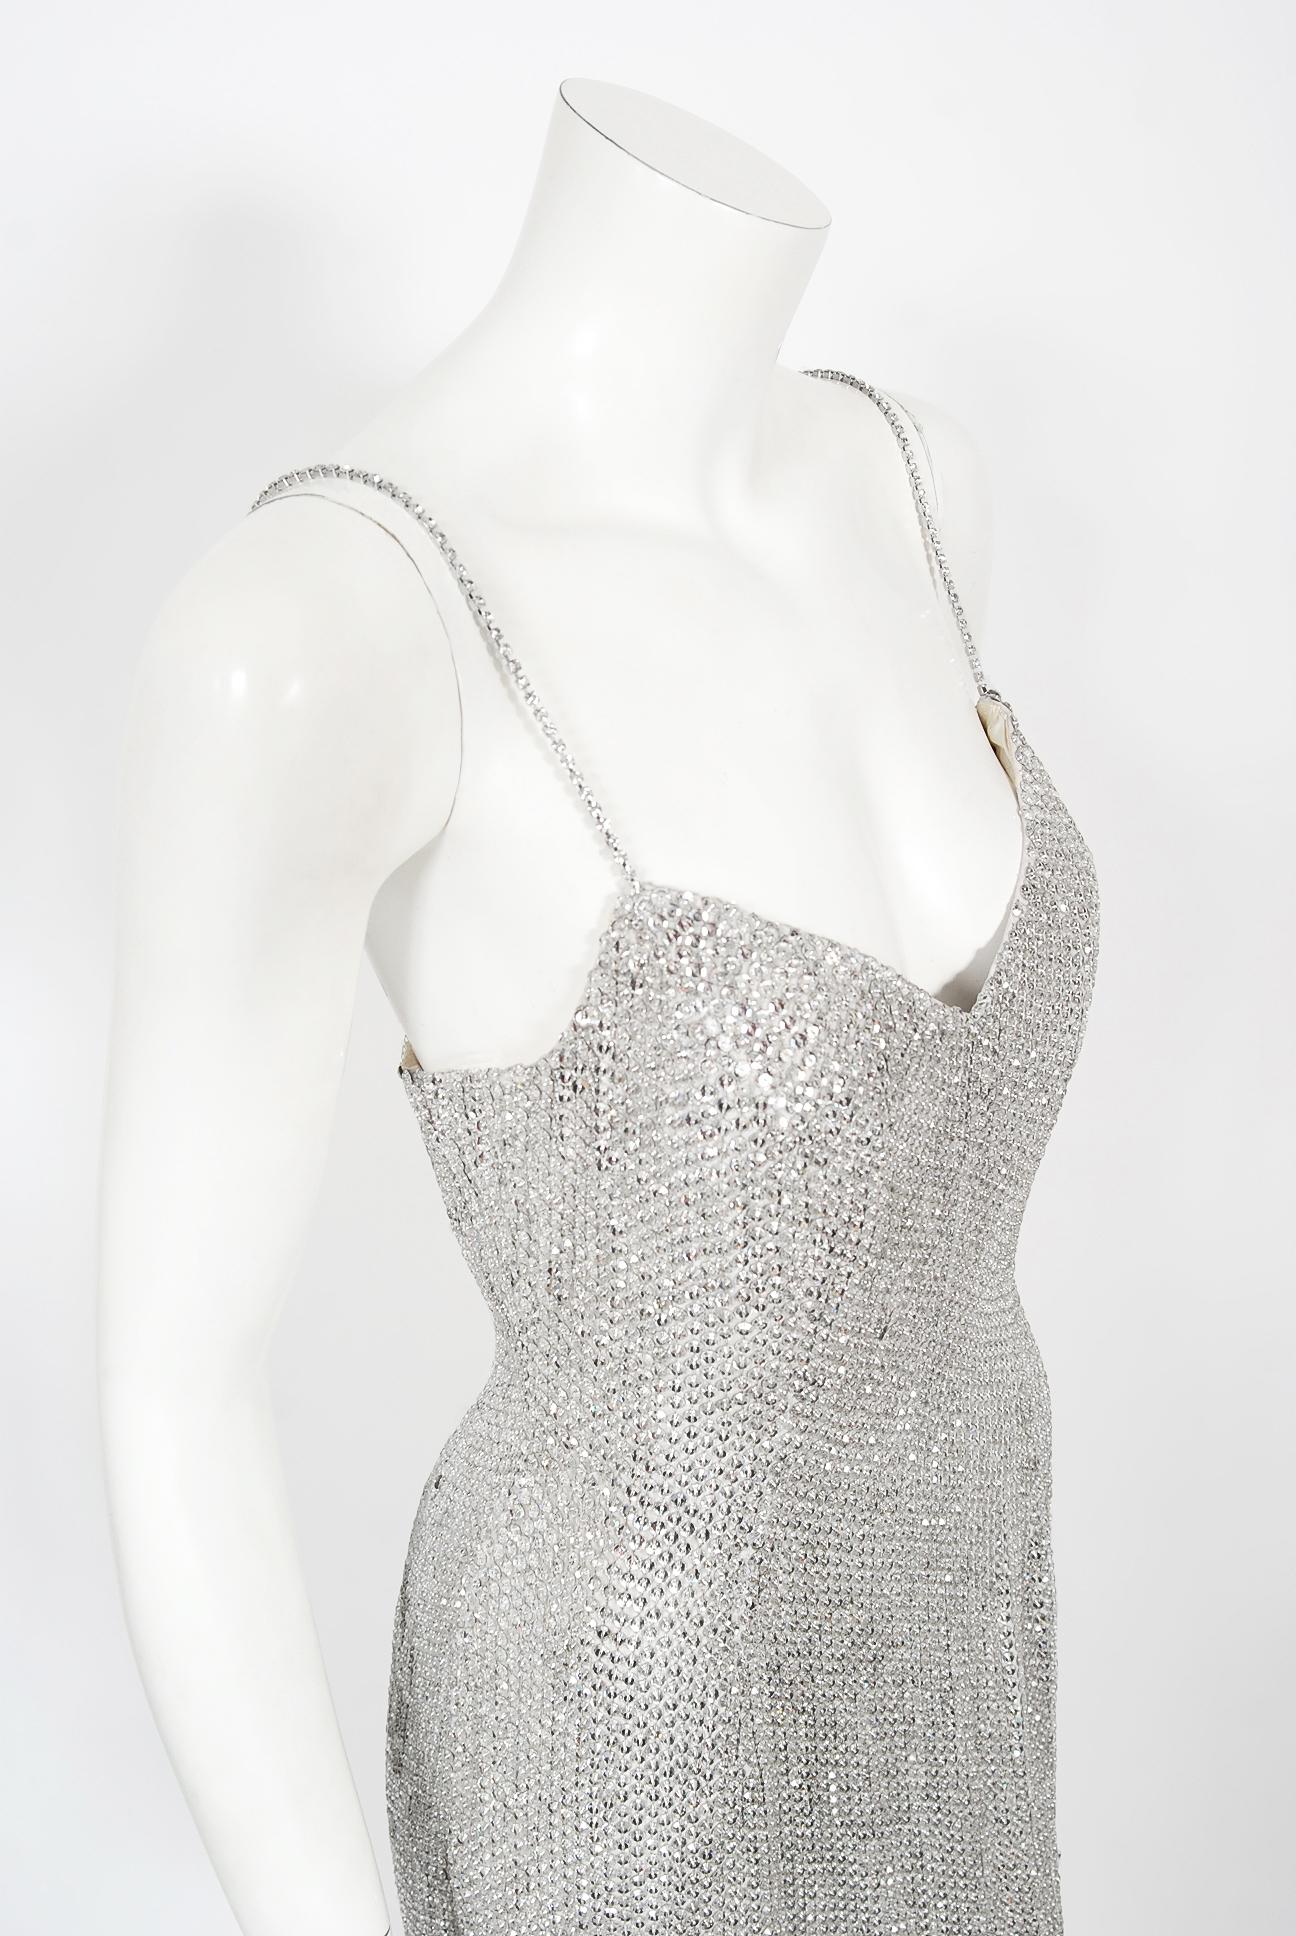 1990 Michael Kors Documented Madonna Beaded Silver Rhinestone Mini Slip Dress For Sale 3